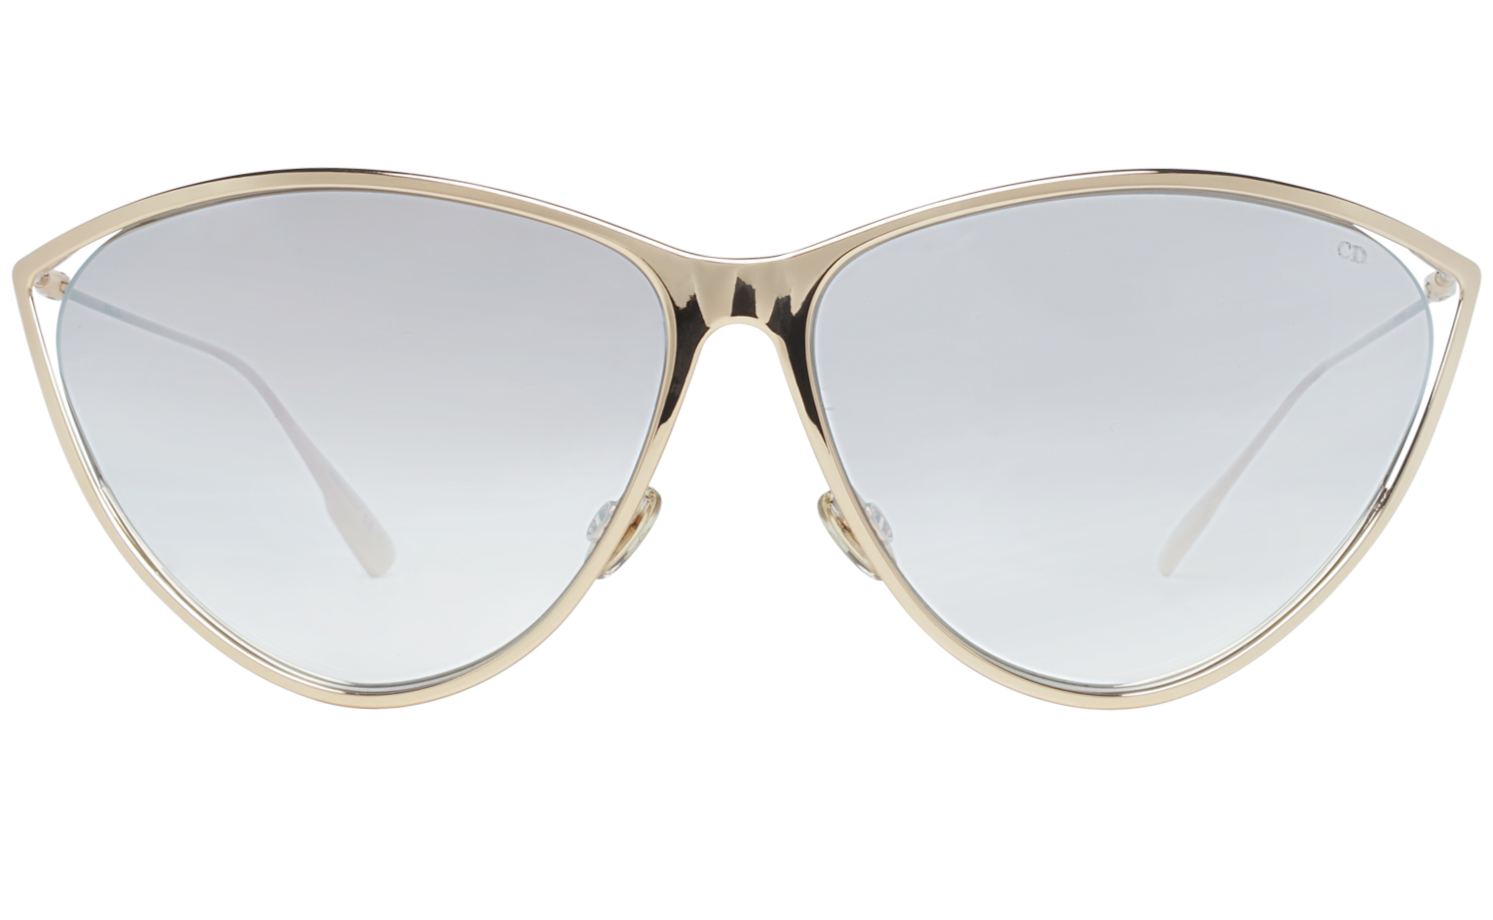 Dior Sunglasses Christian Dior DIOR NEW MOTARD 000 Sunglasses Eyeglasses Eyewear UK USA Australia 